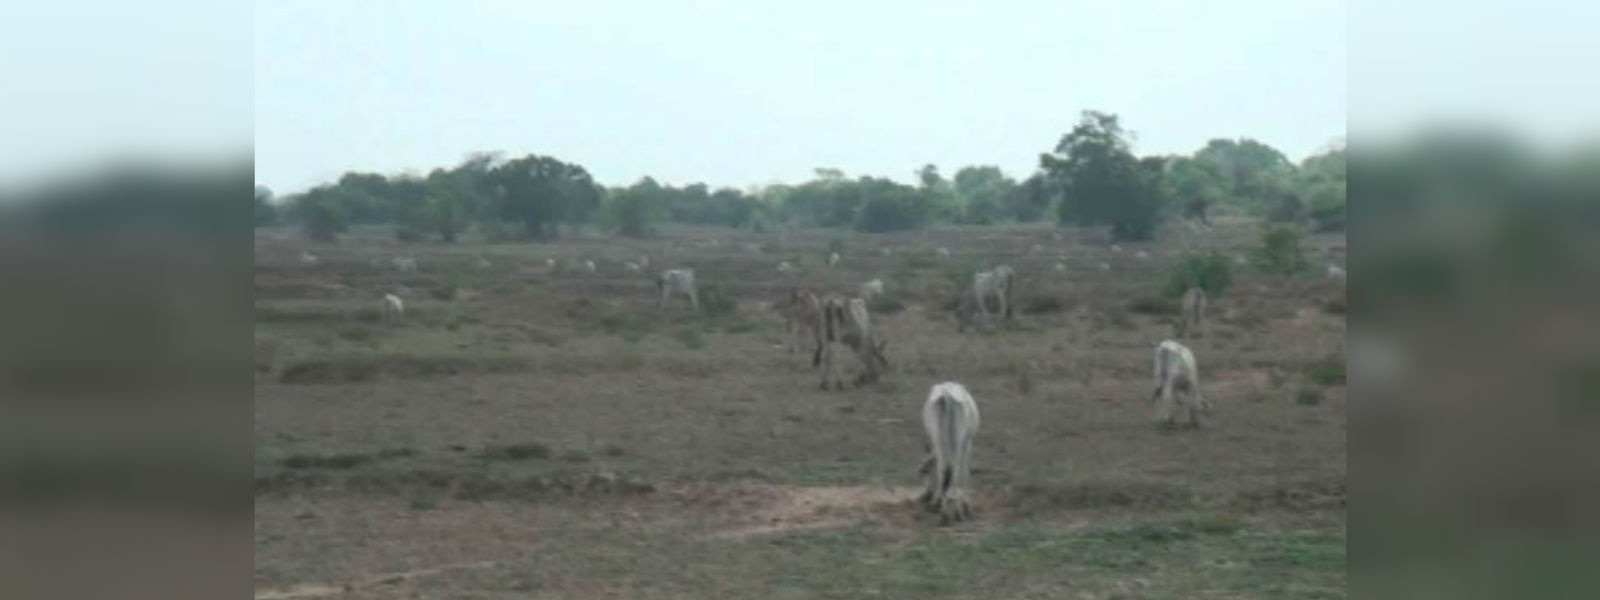 Livestock farming in Batticaloa threatened by lack of water